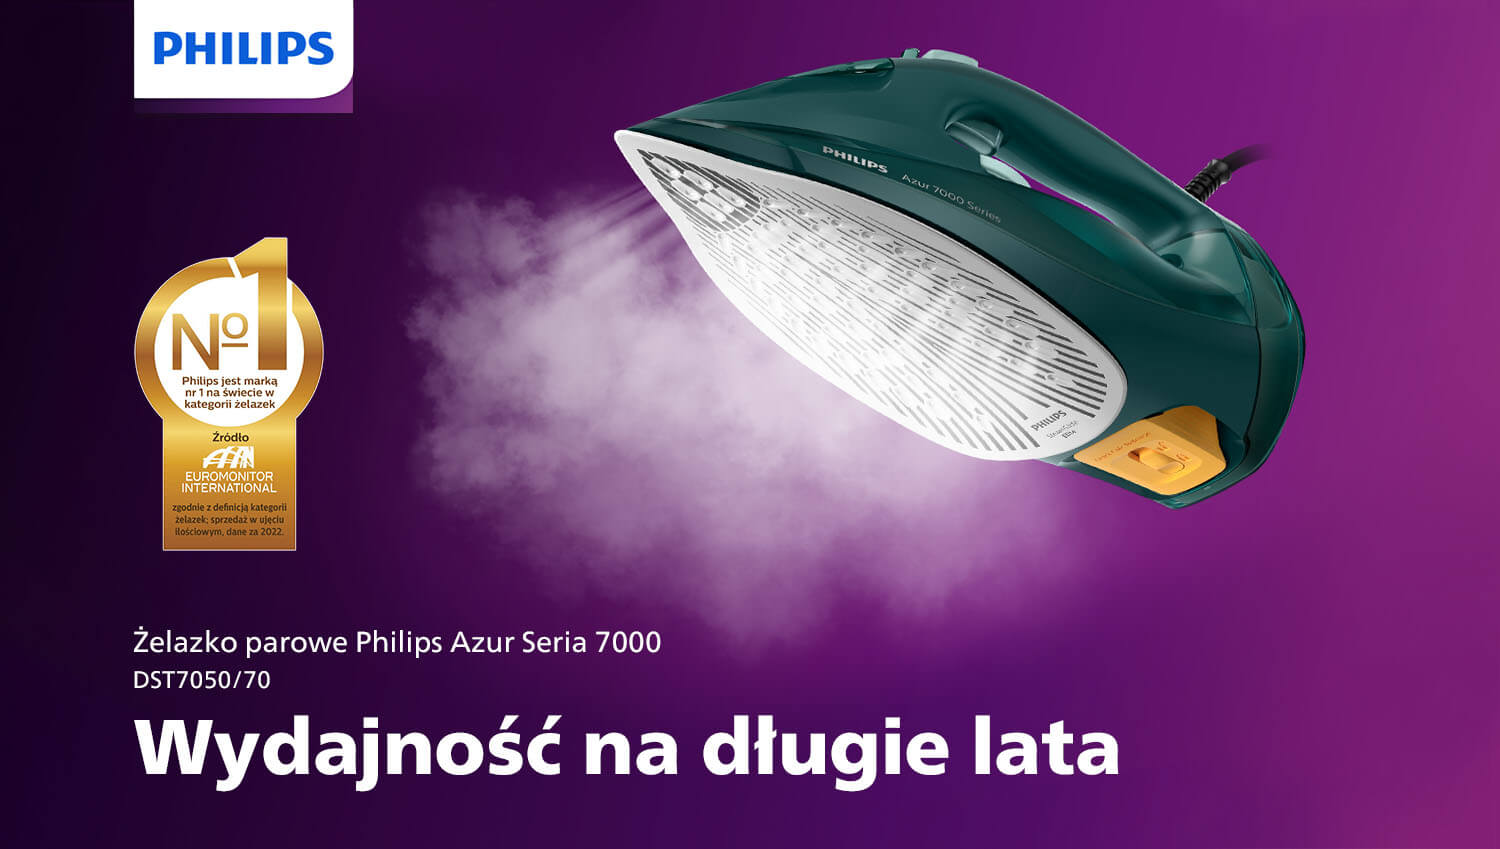 Парова праска Philips Azur доступна в магазинах RTV Euro AGD